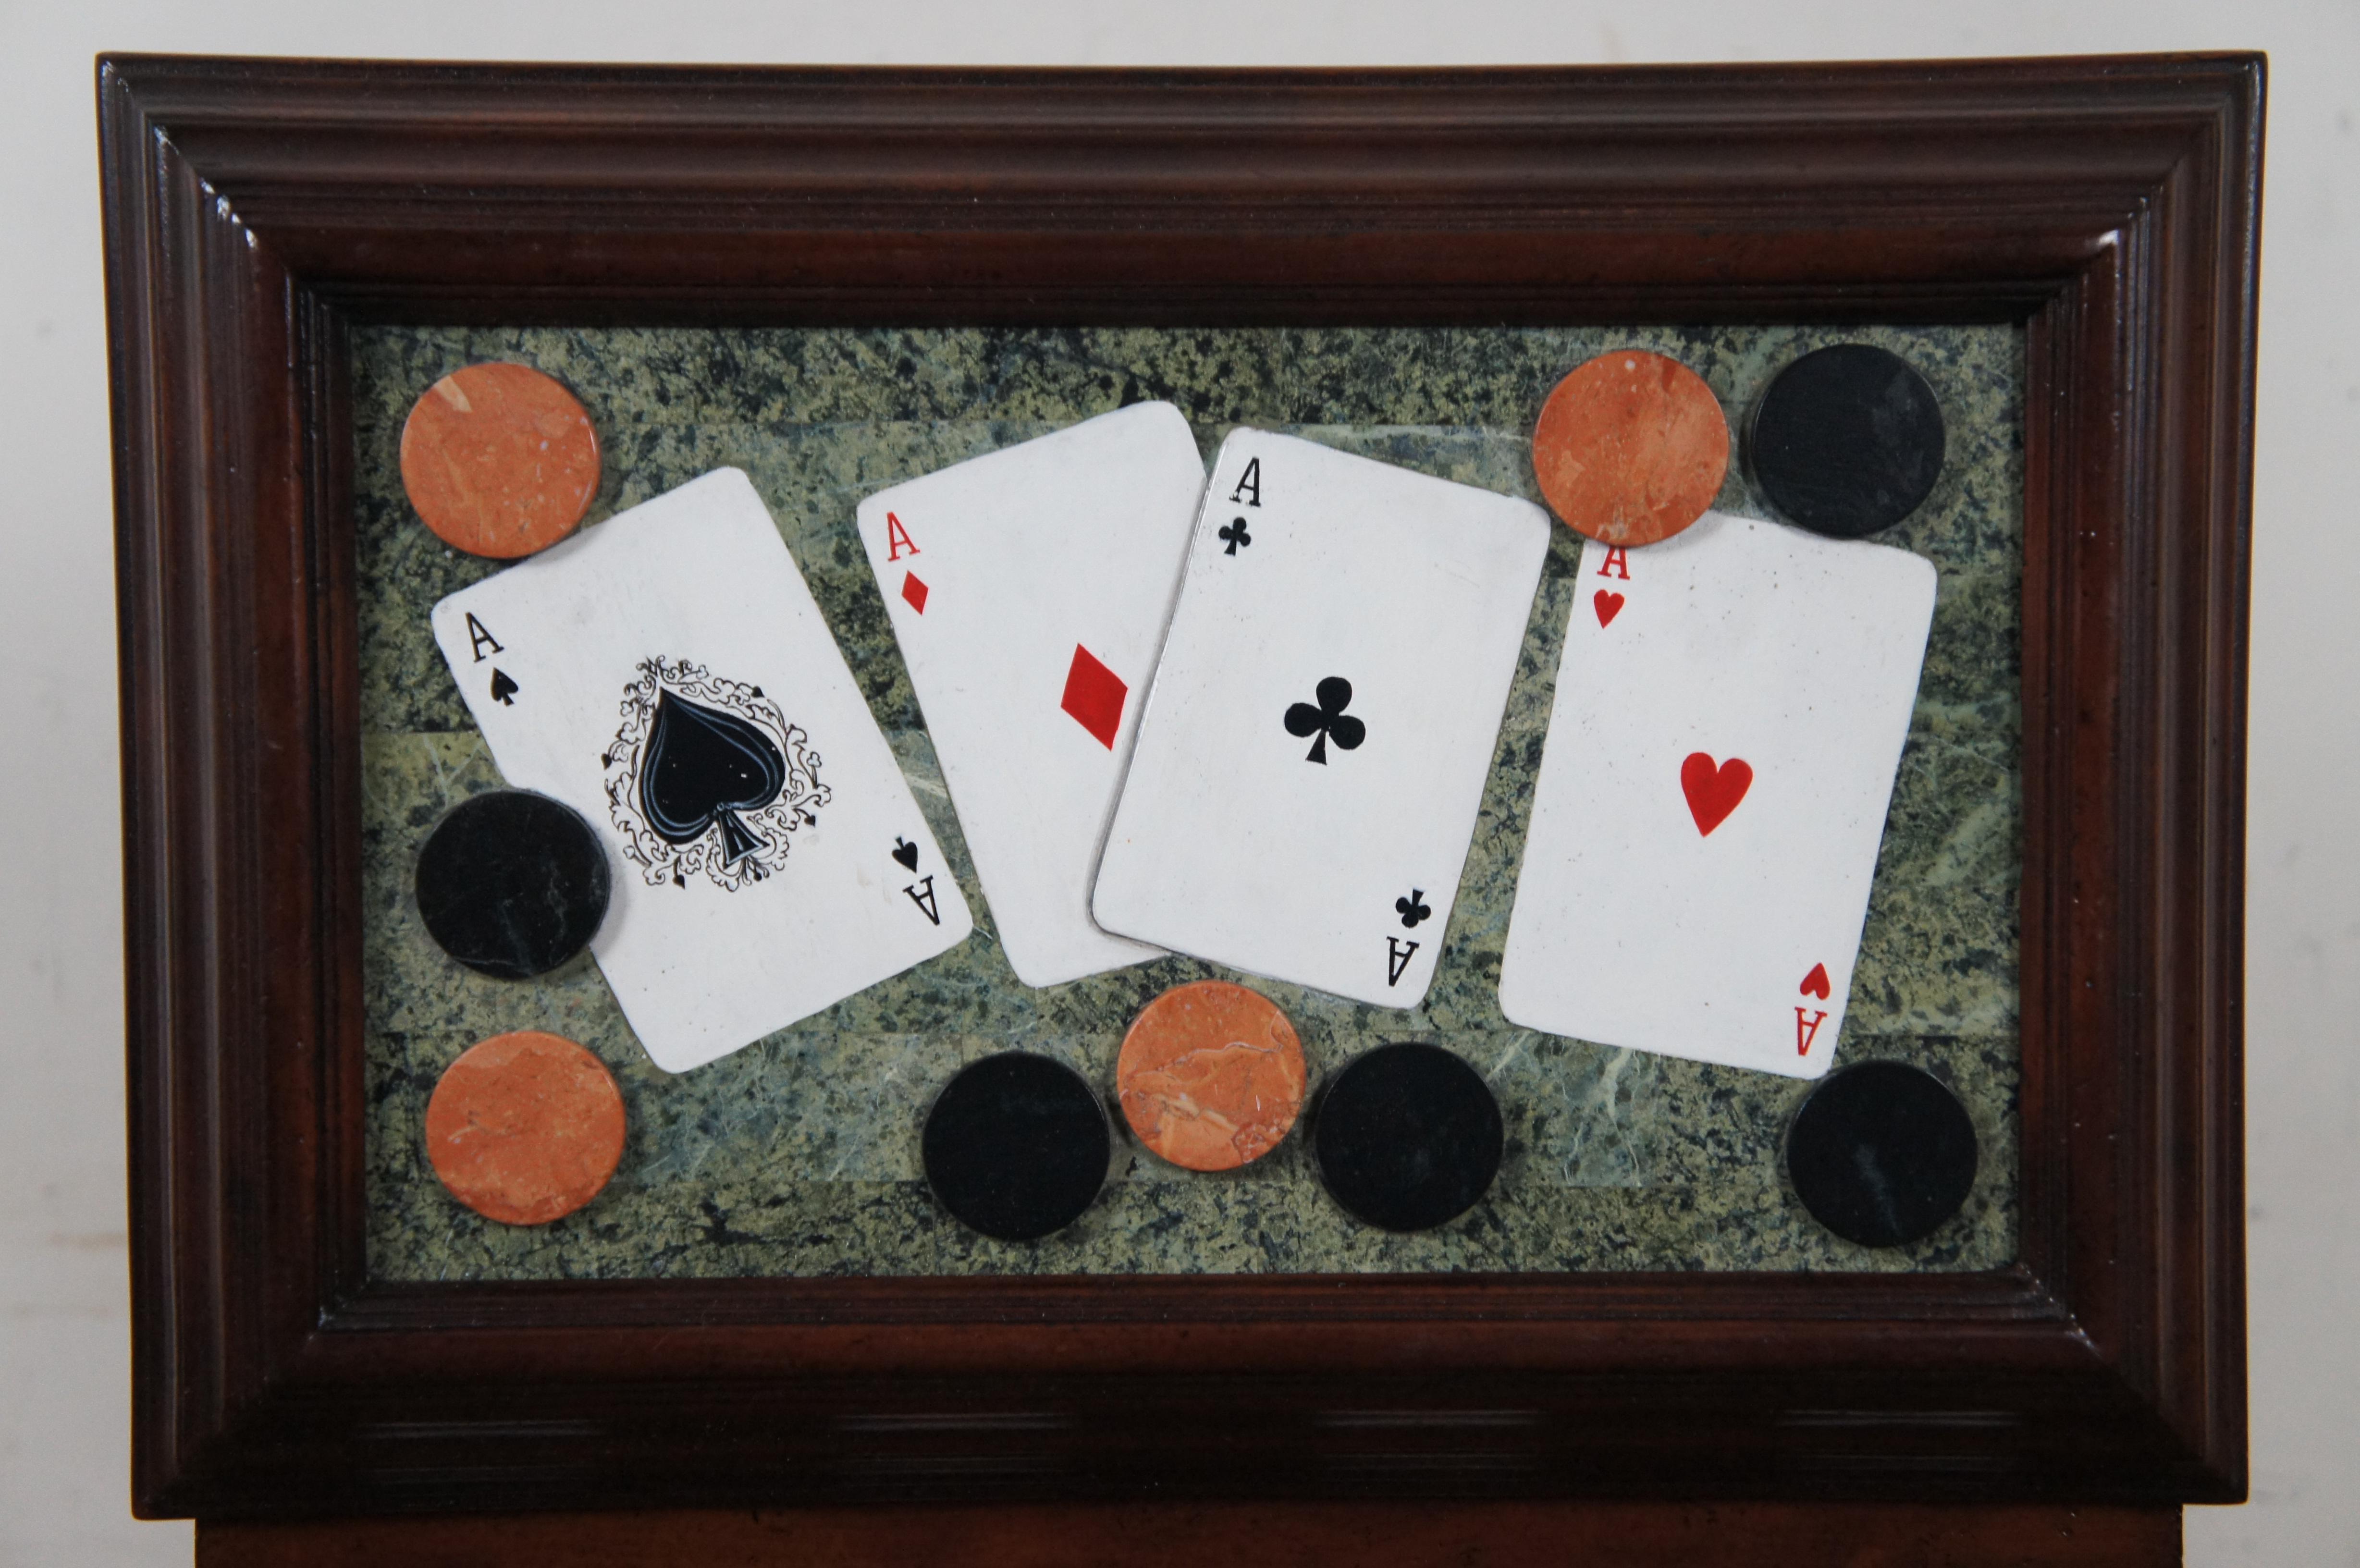 Maitland Smith Inlaid Aces High 4 of a Kind Stone Poker Game Keepsake Box 15